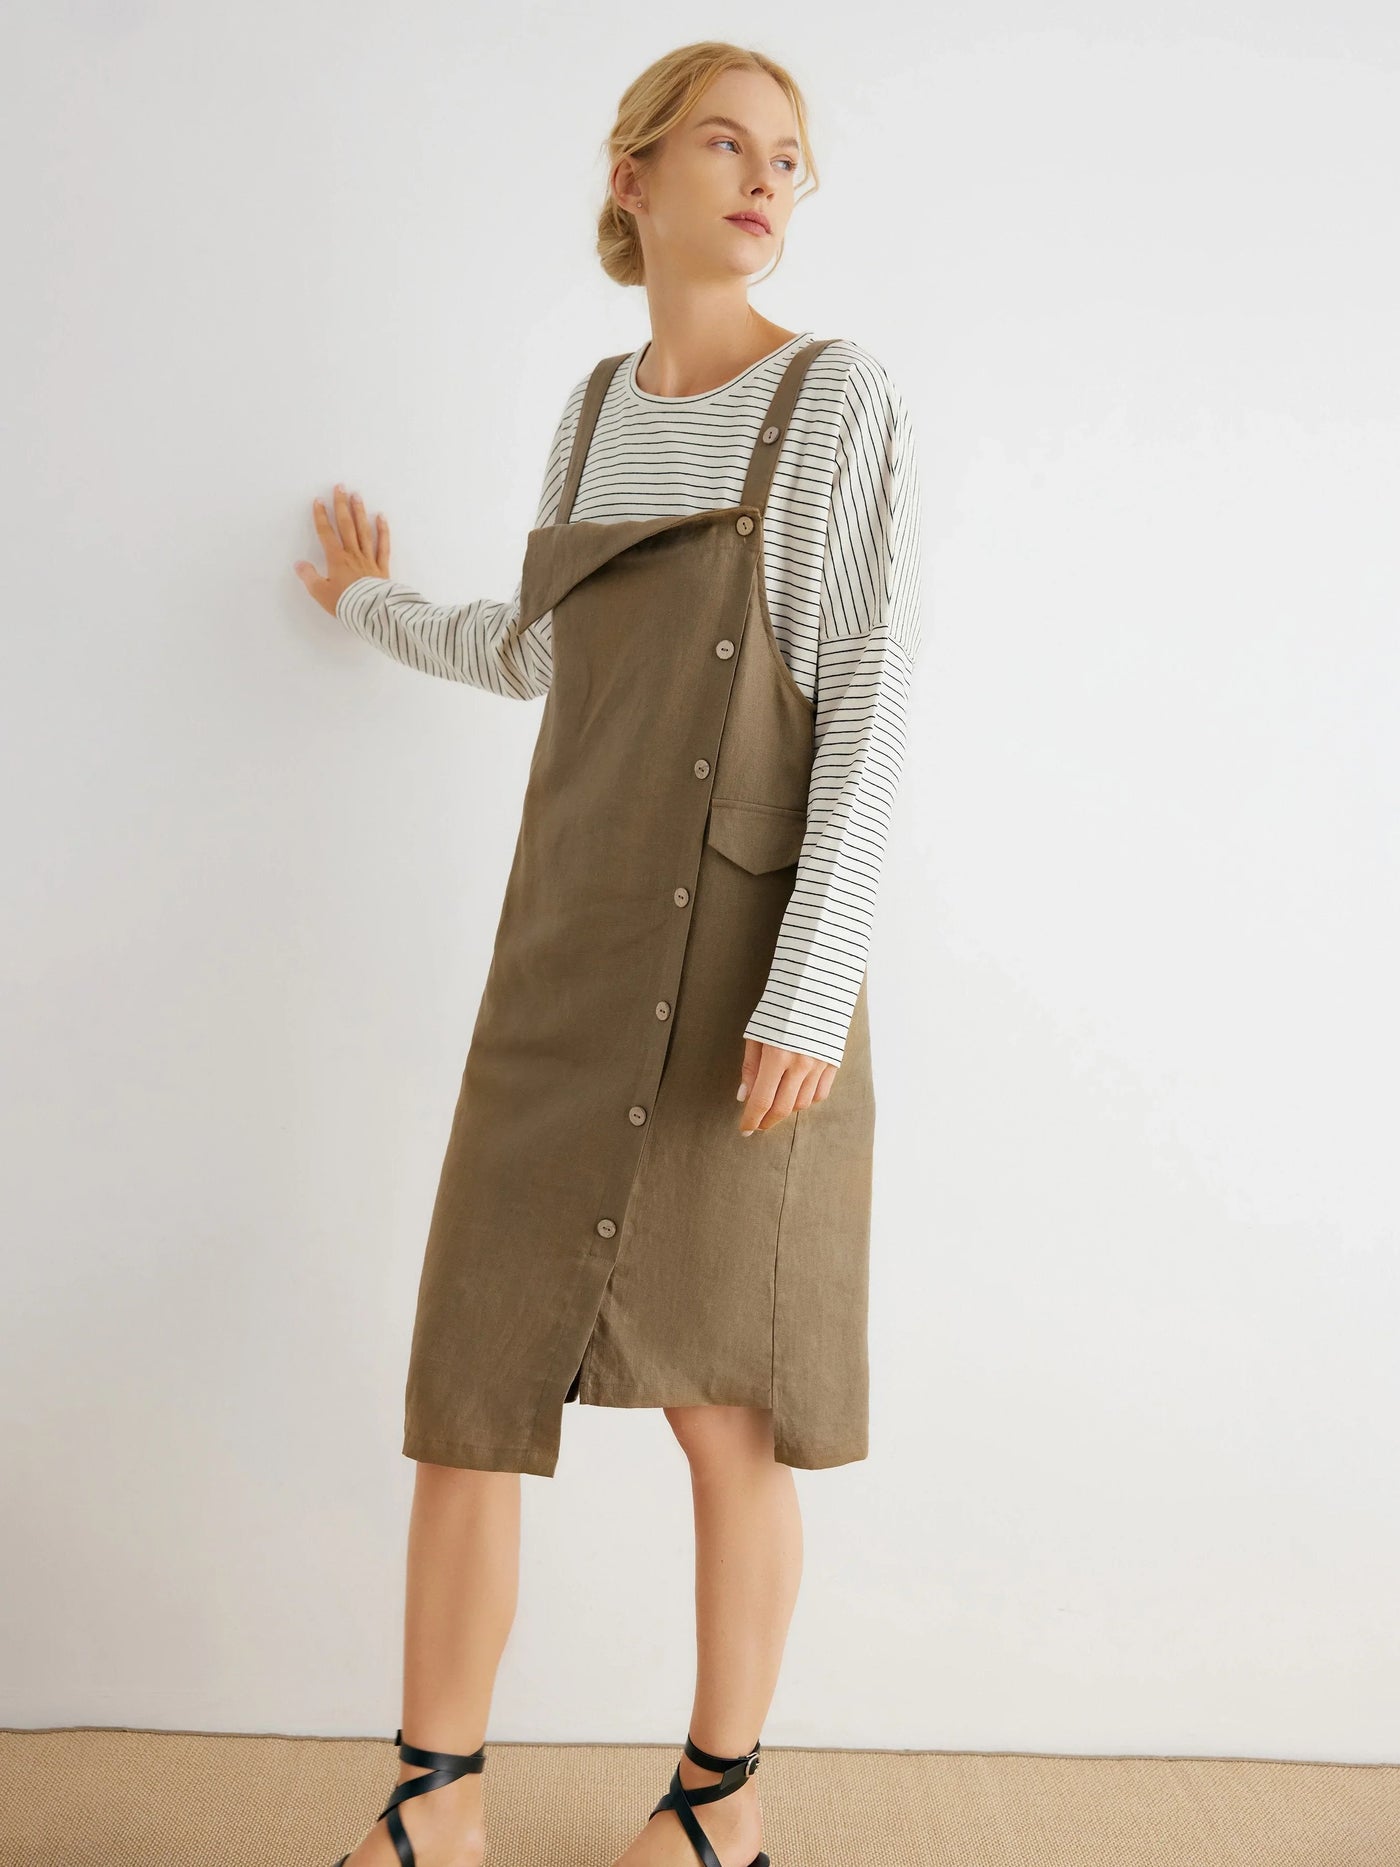 Milly 100% Linen Asymmetrical Buttons Slouchy Overall Dress